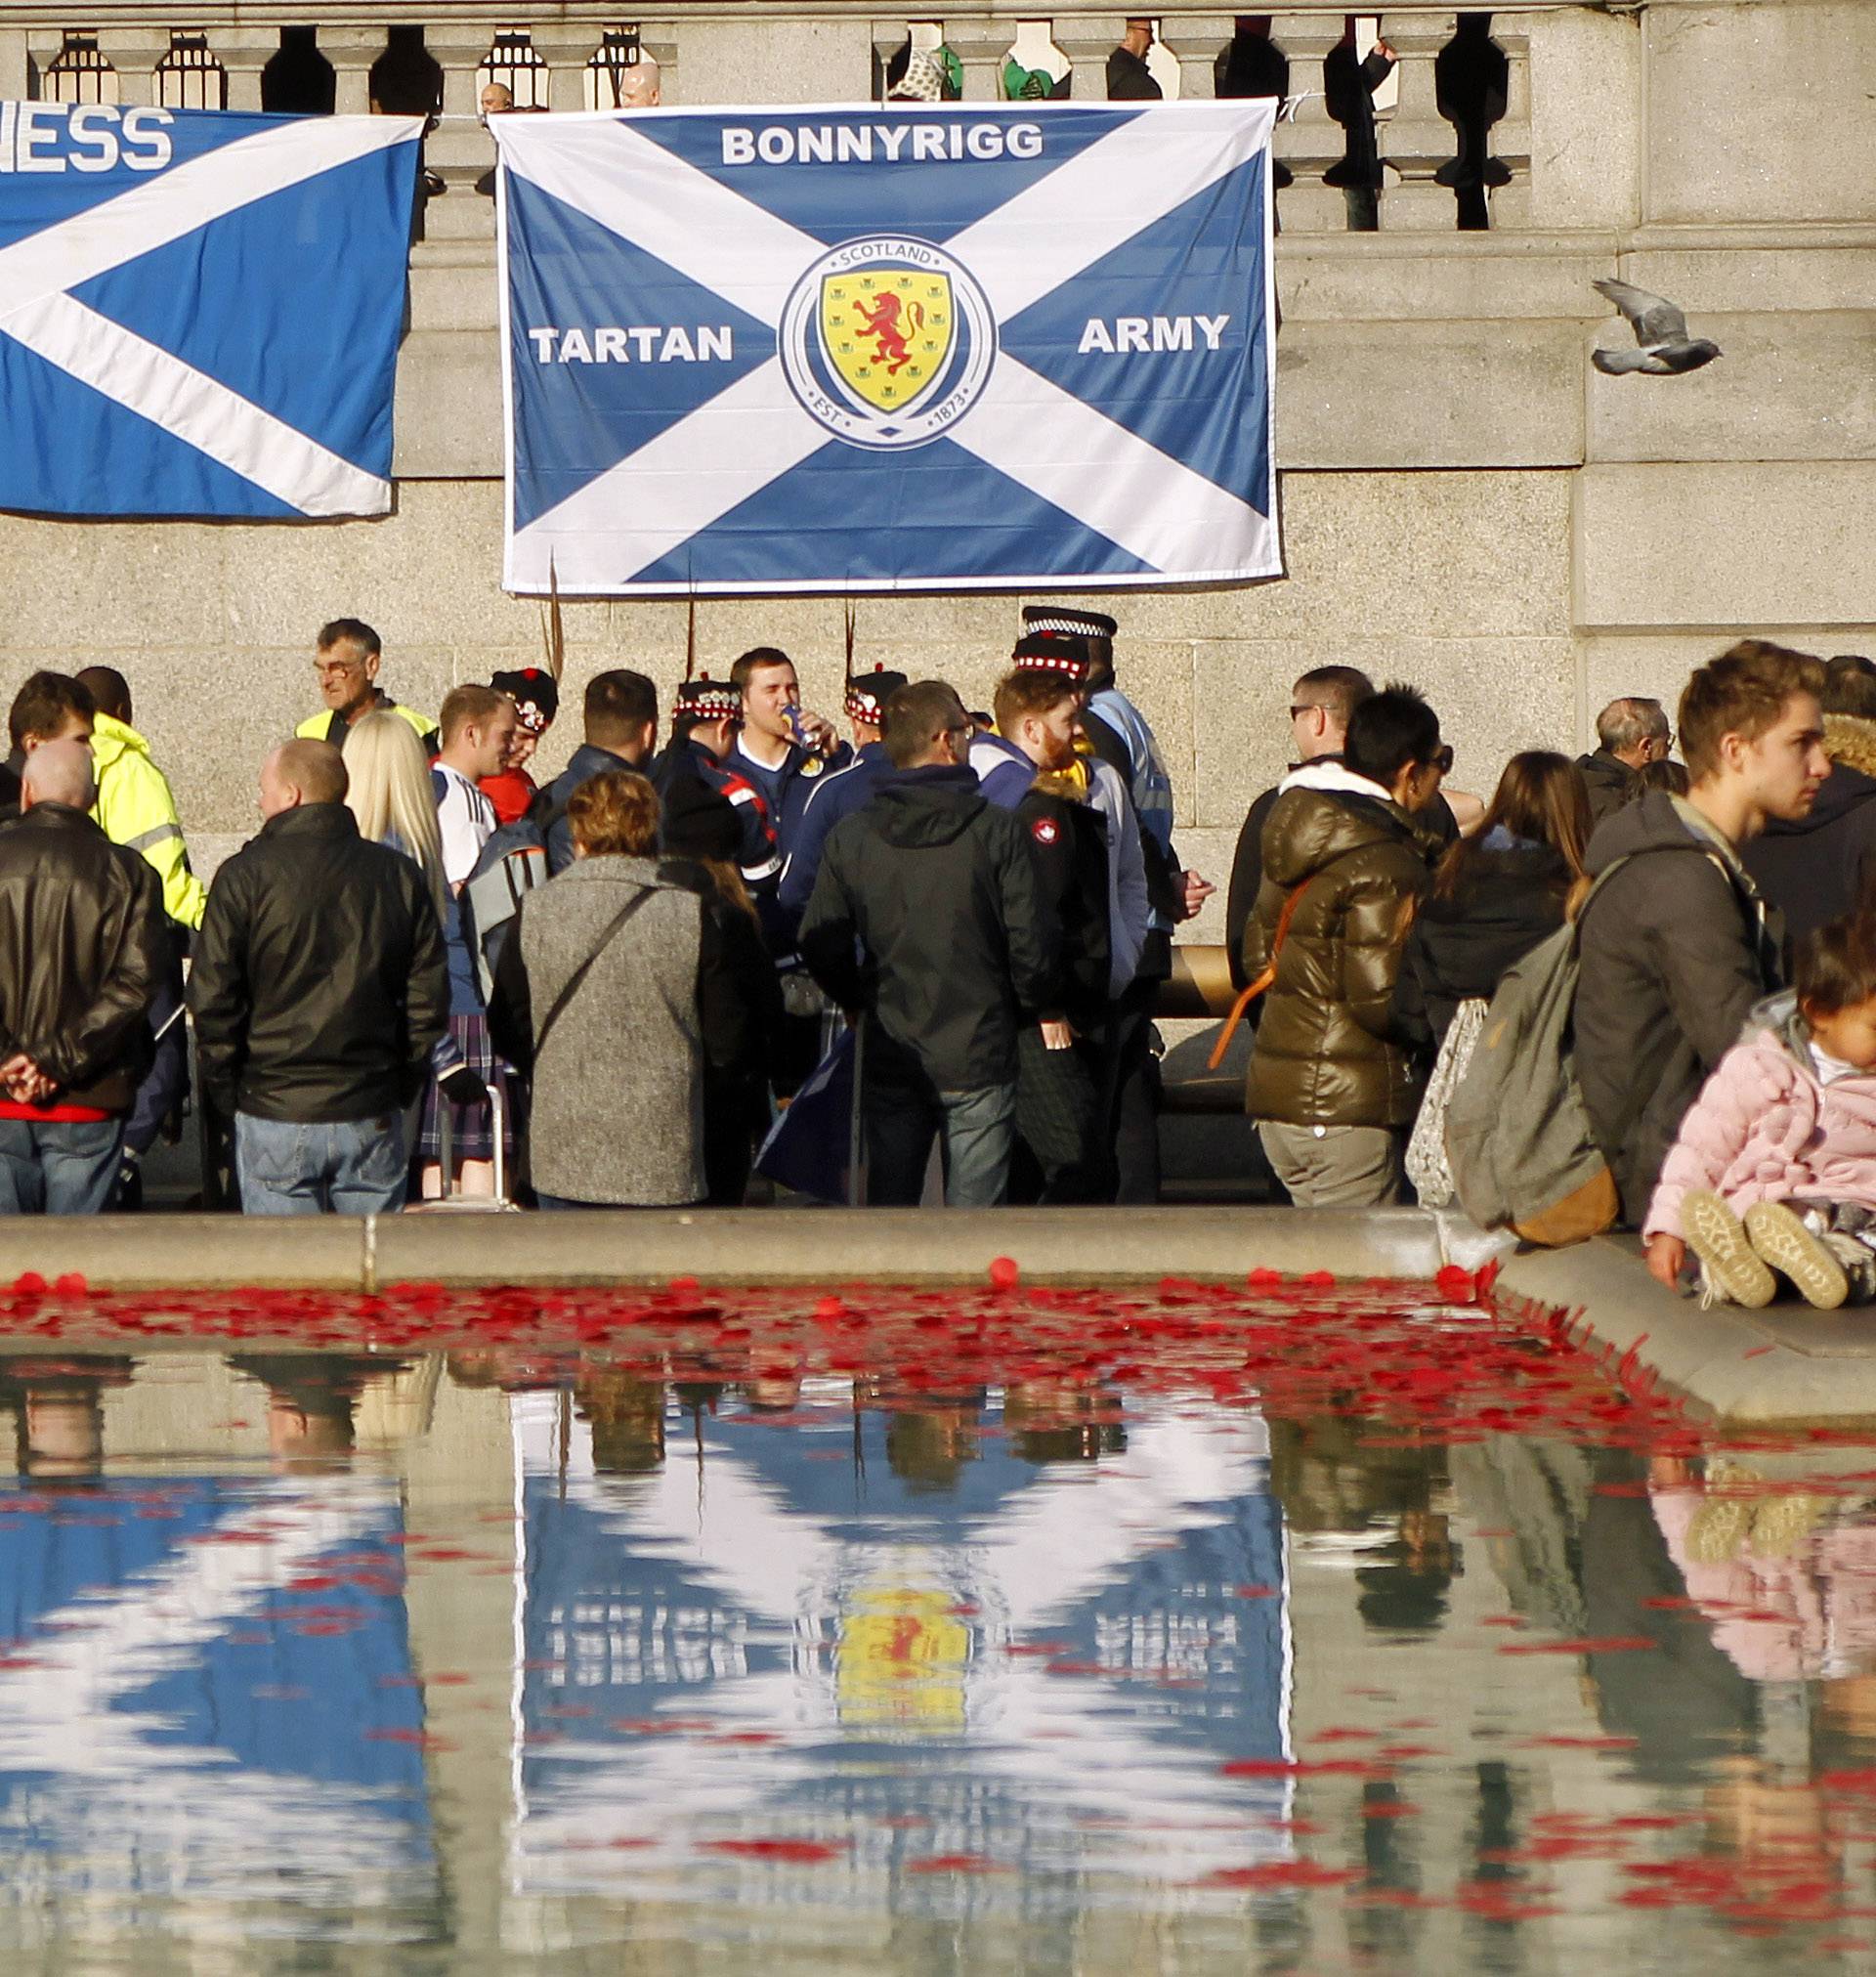 General view of Scotland flags in Trafalgar Square